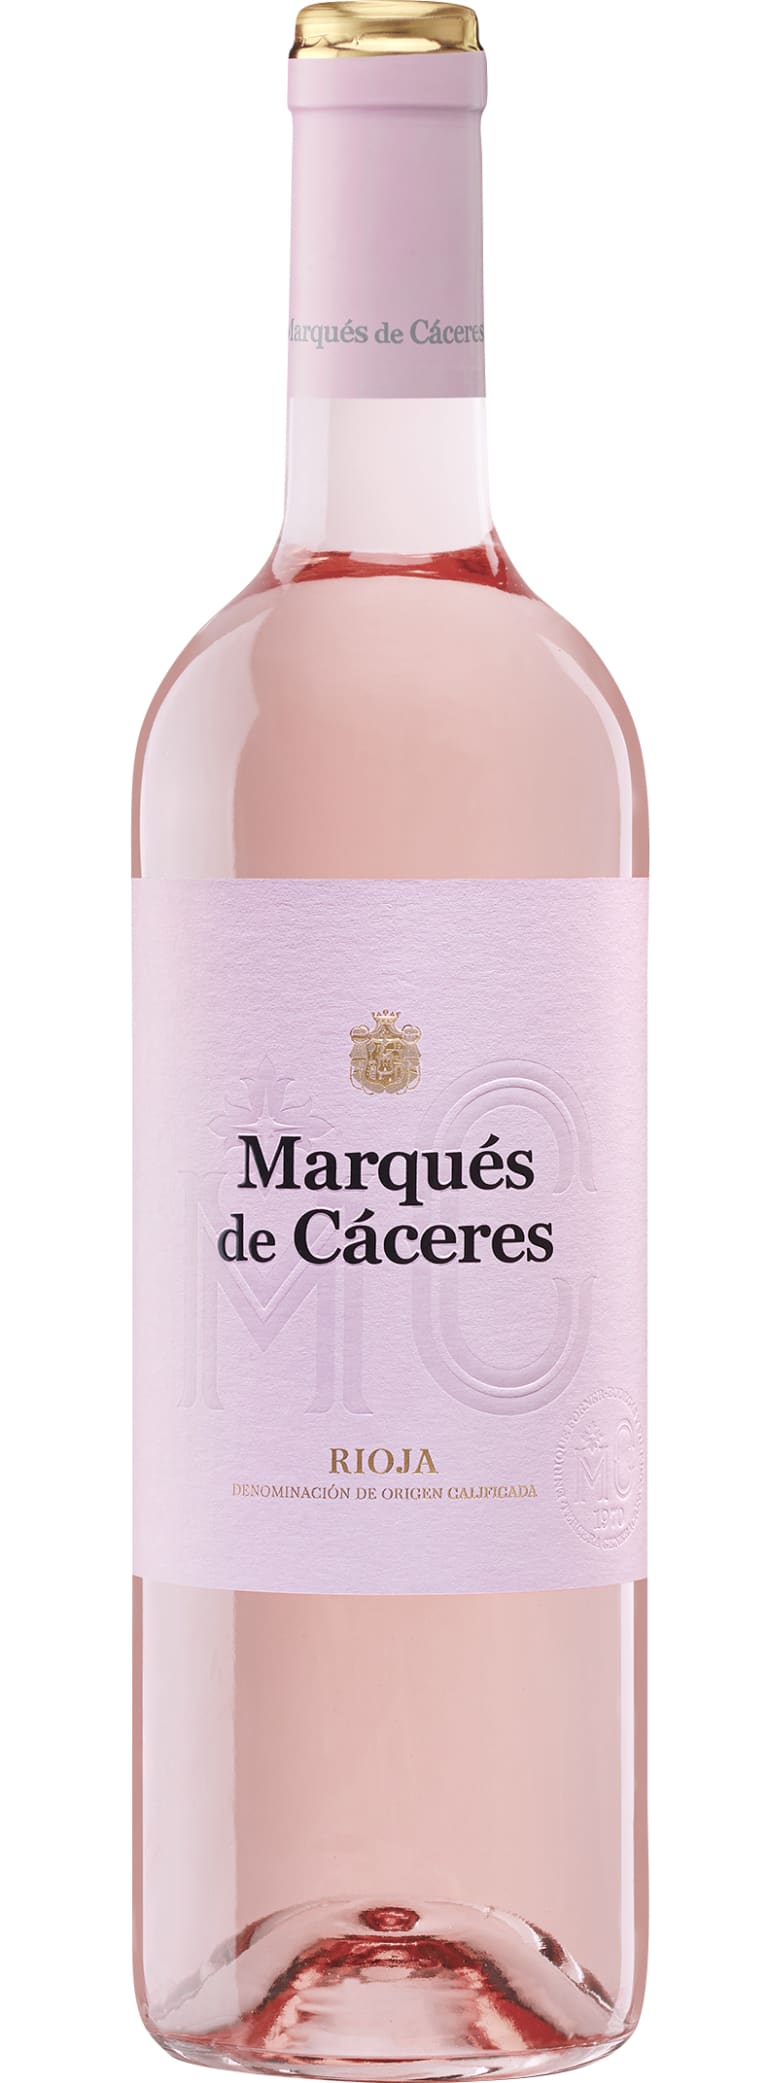 Marques de Caceres Rioja Rose 2020